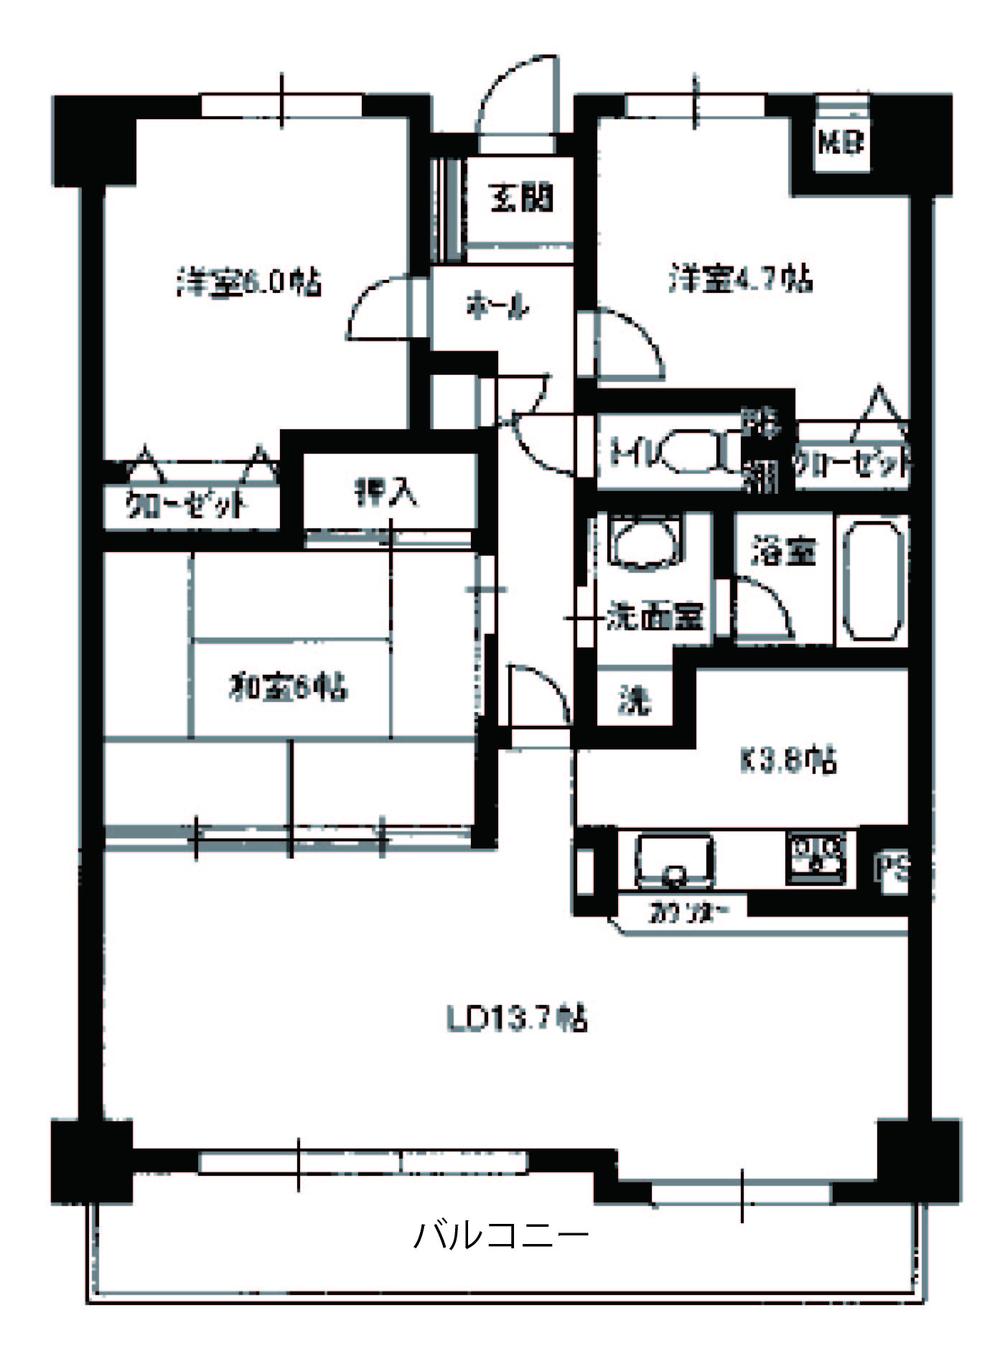 Floor plan. 3LDK, Price 14.8 million yen, Occupied area 70.17 sq m , Balcony area 9.47 sq m